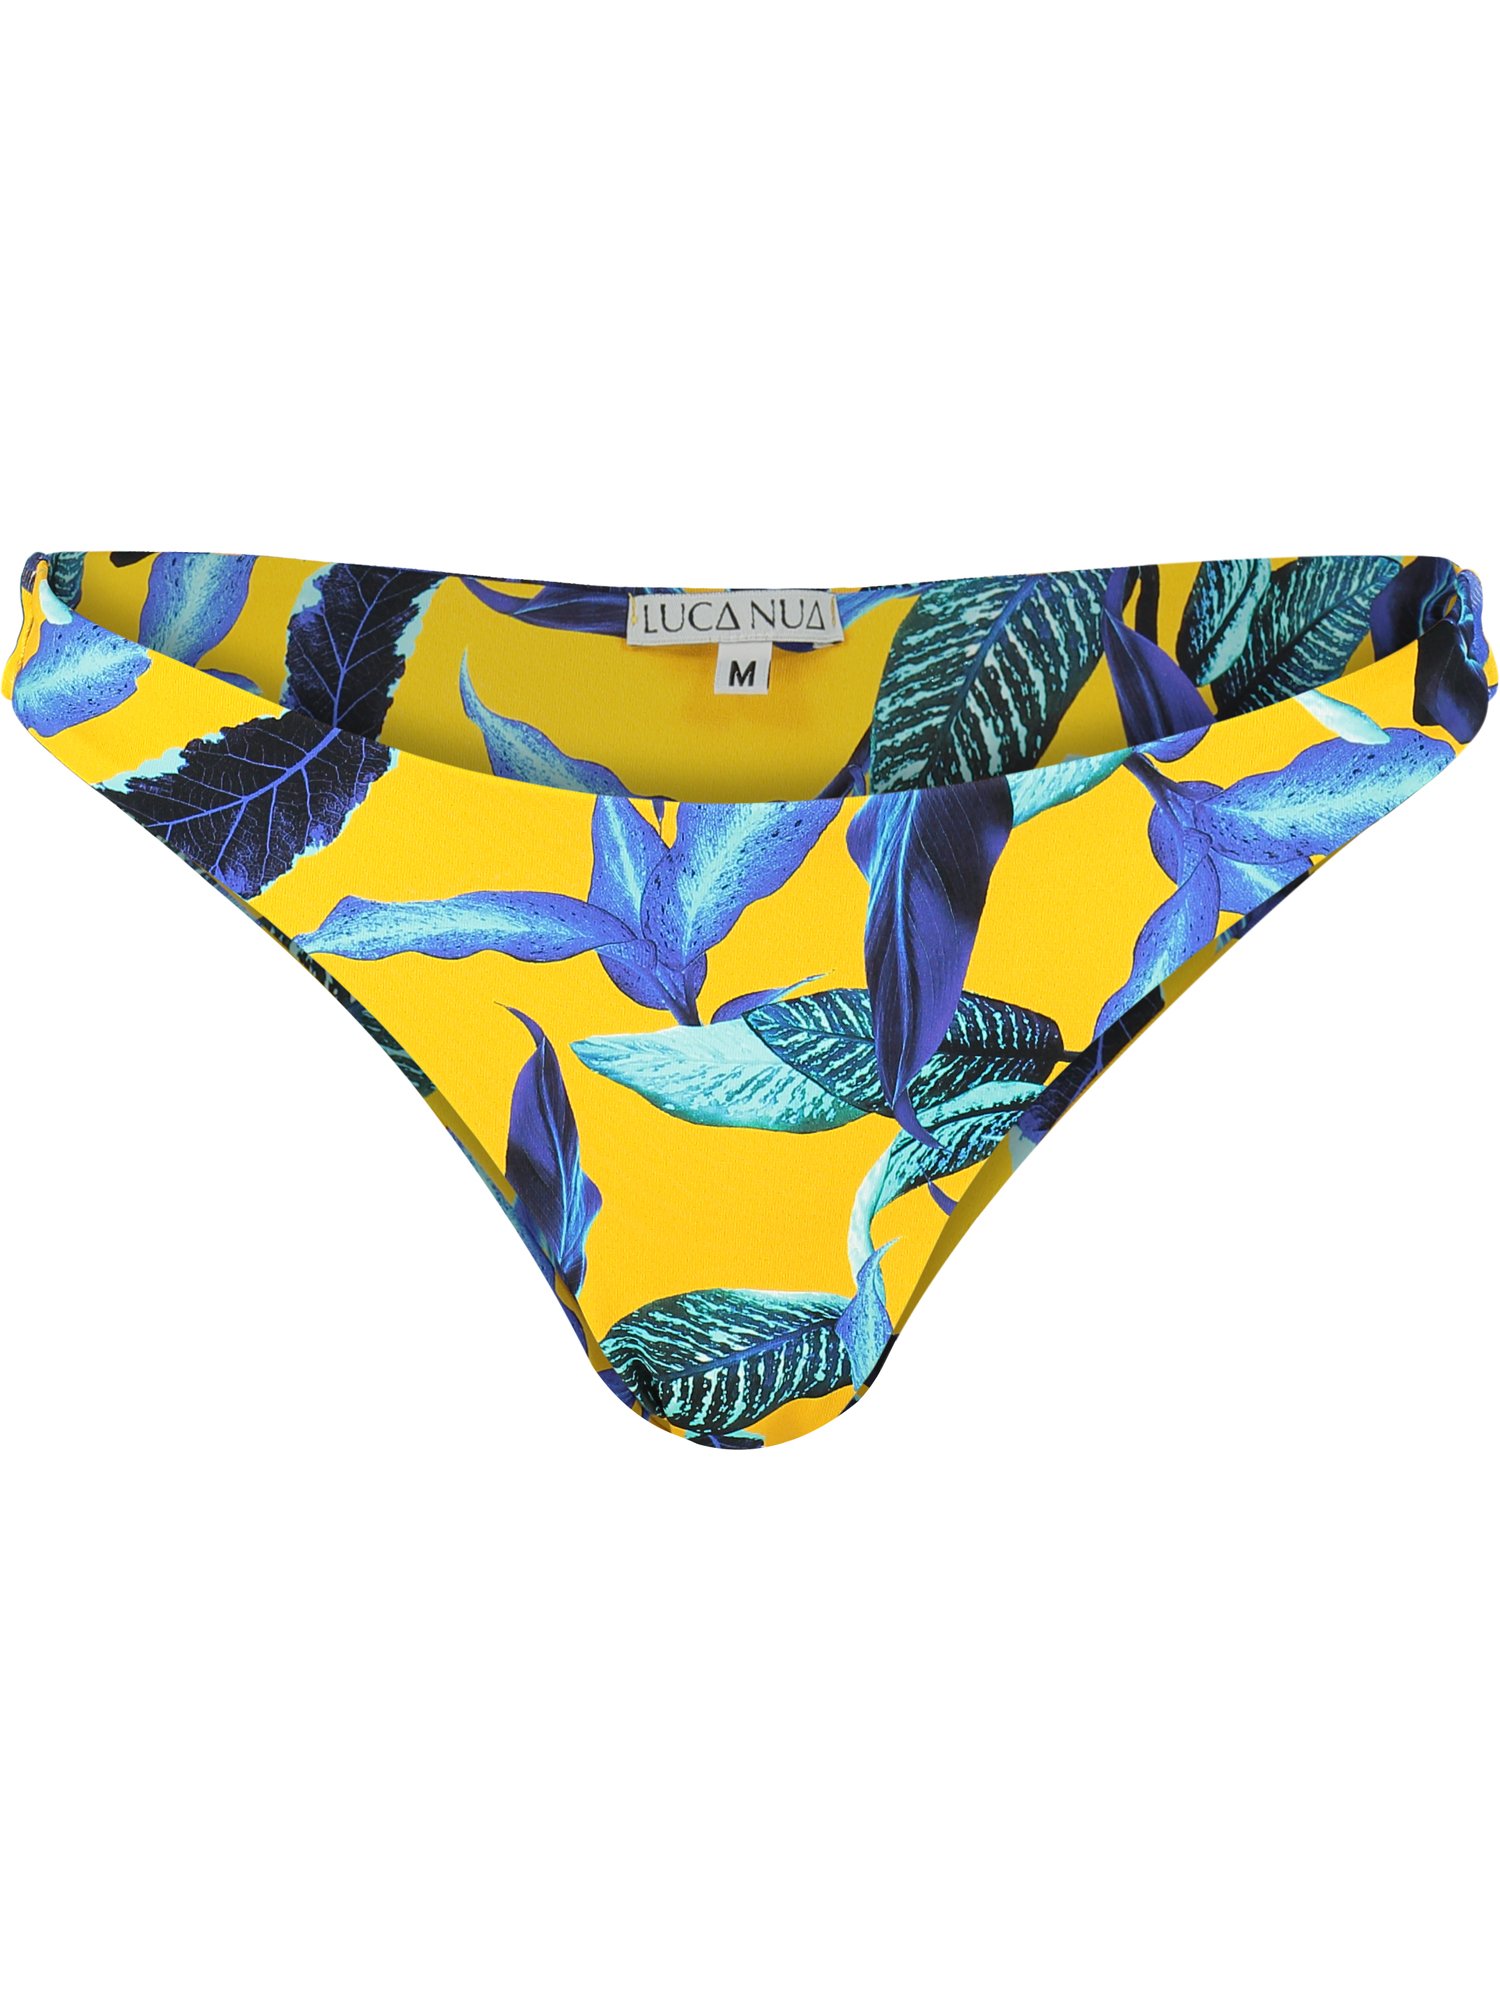 Anitta Nua Bottoms — Luca Nua London | Swimwear